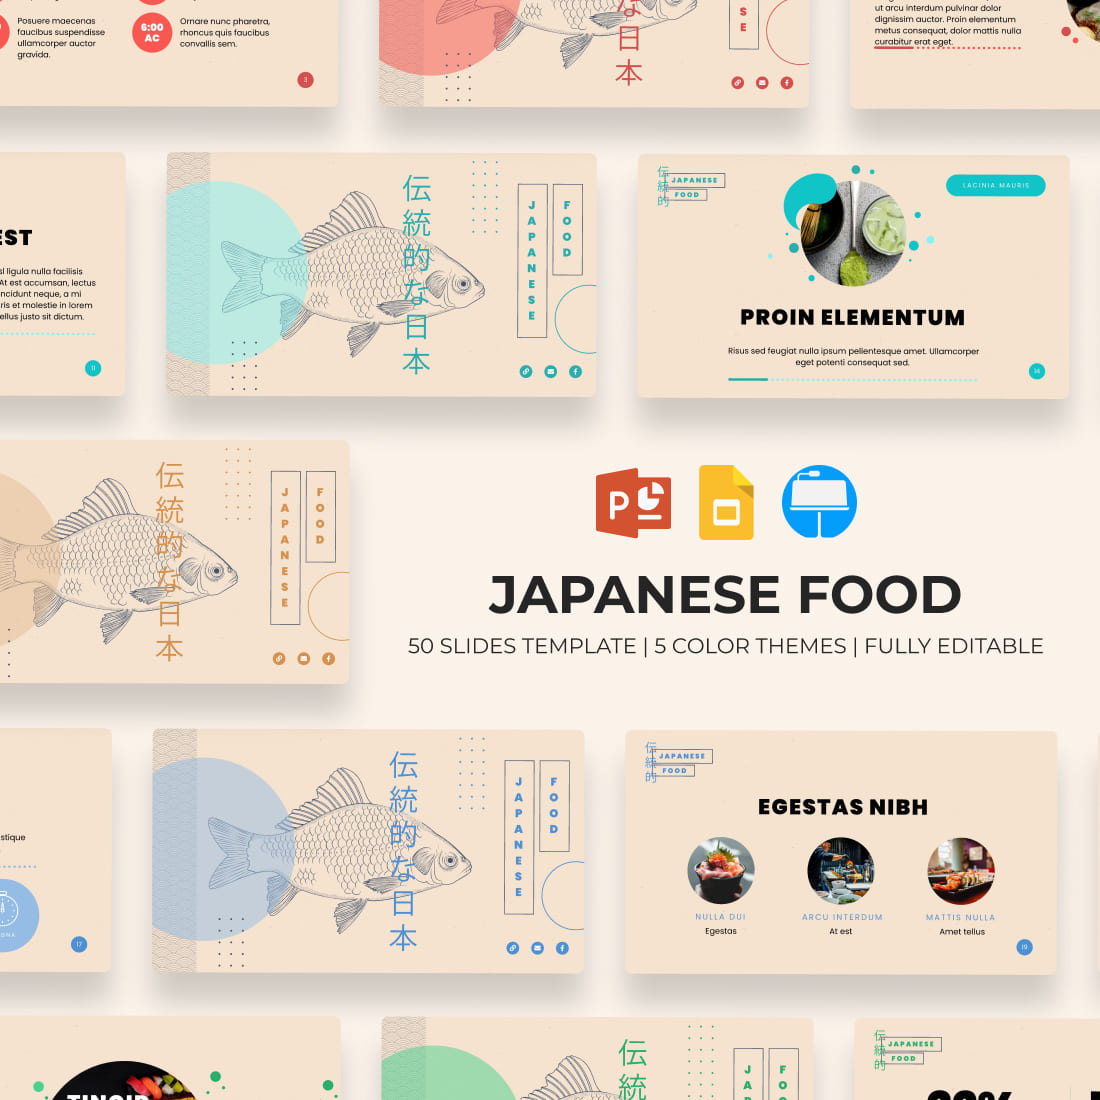 Japan Food Presentation Template main cover.